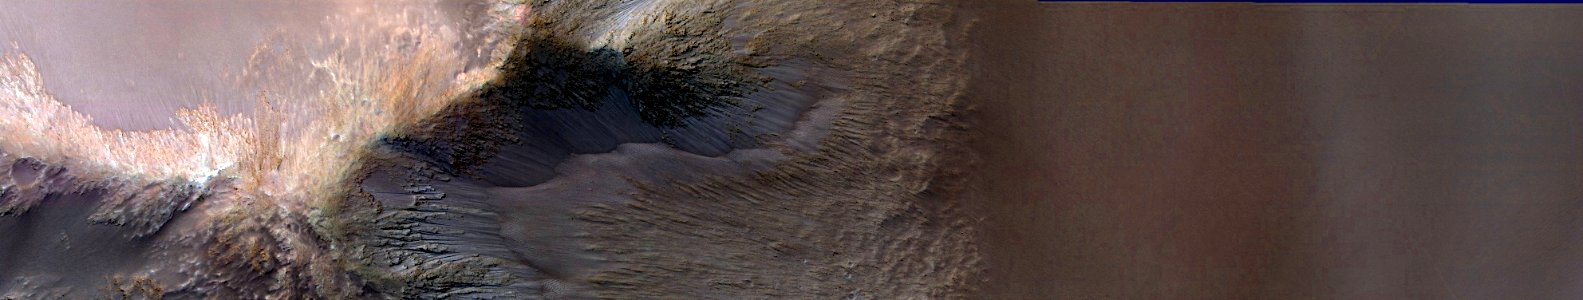 Mars - Slopes in Juventae Chasma